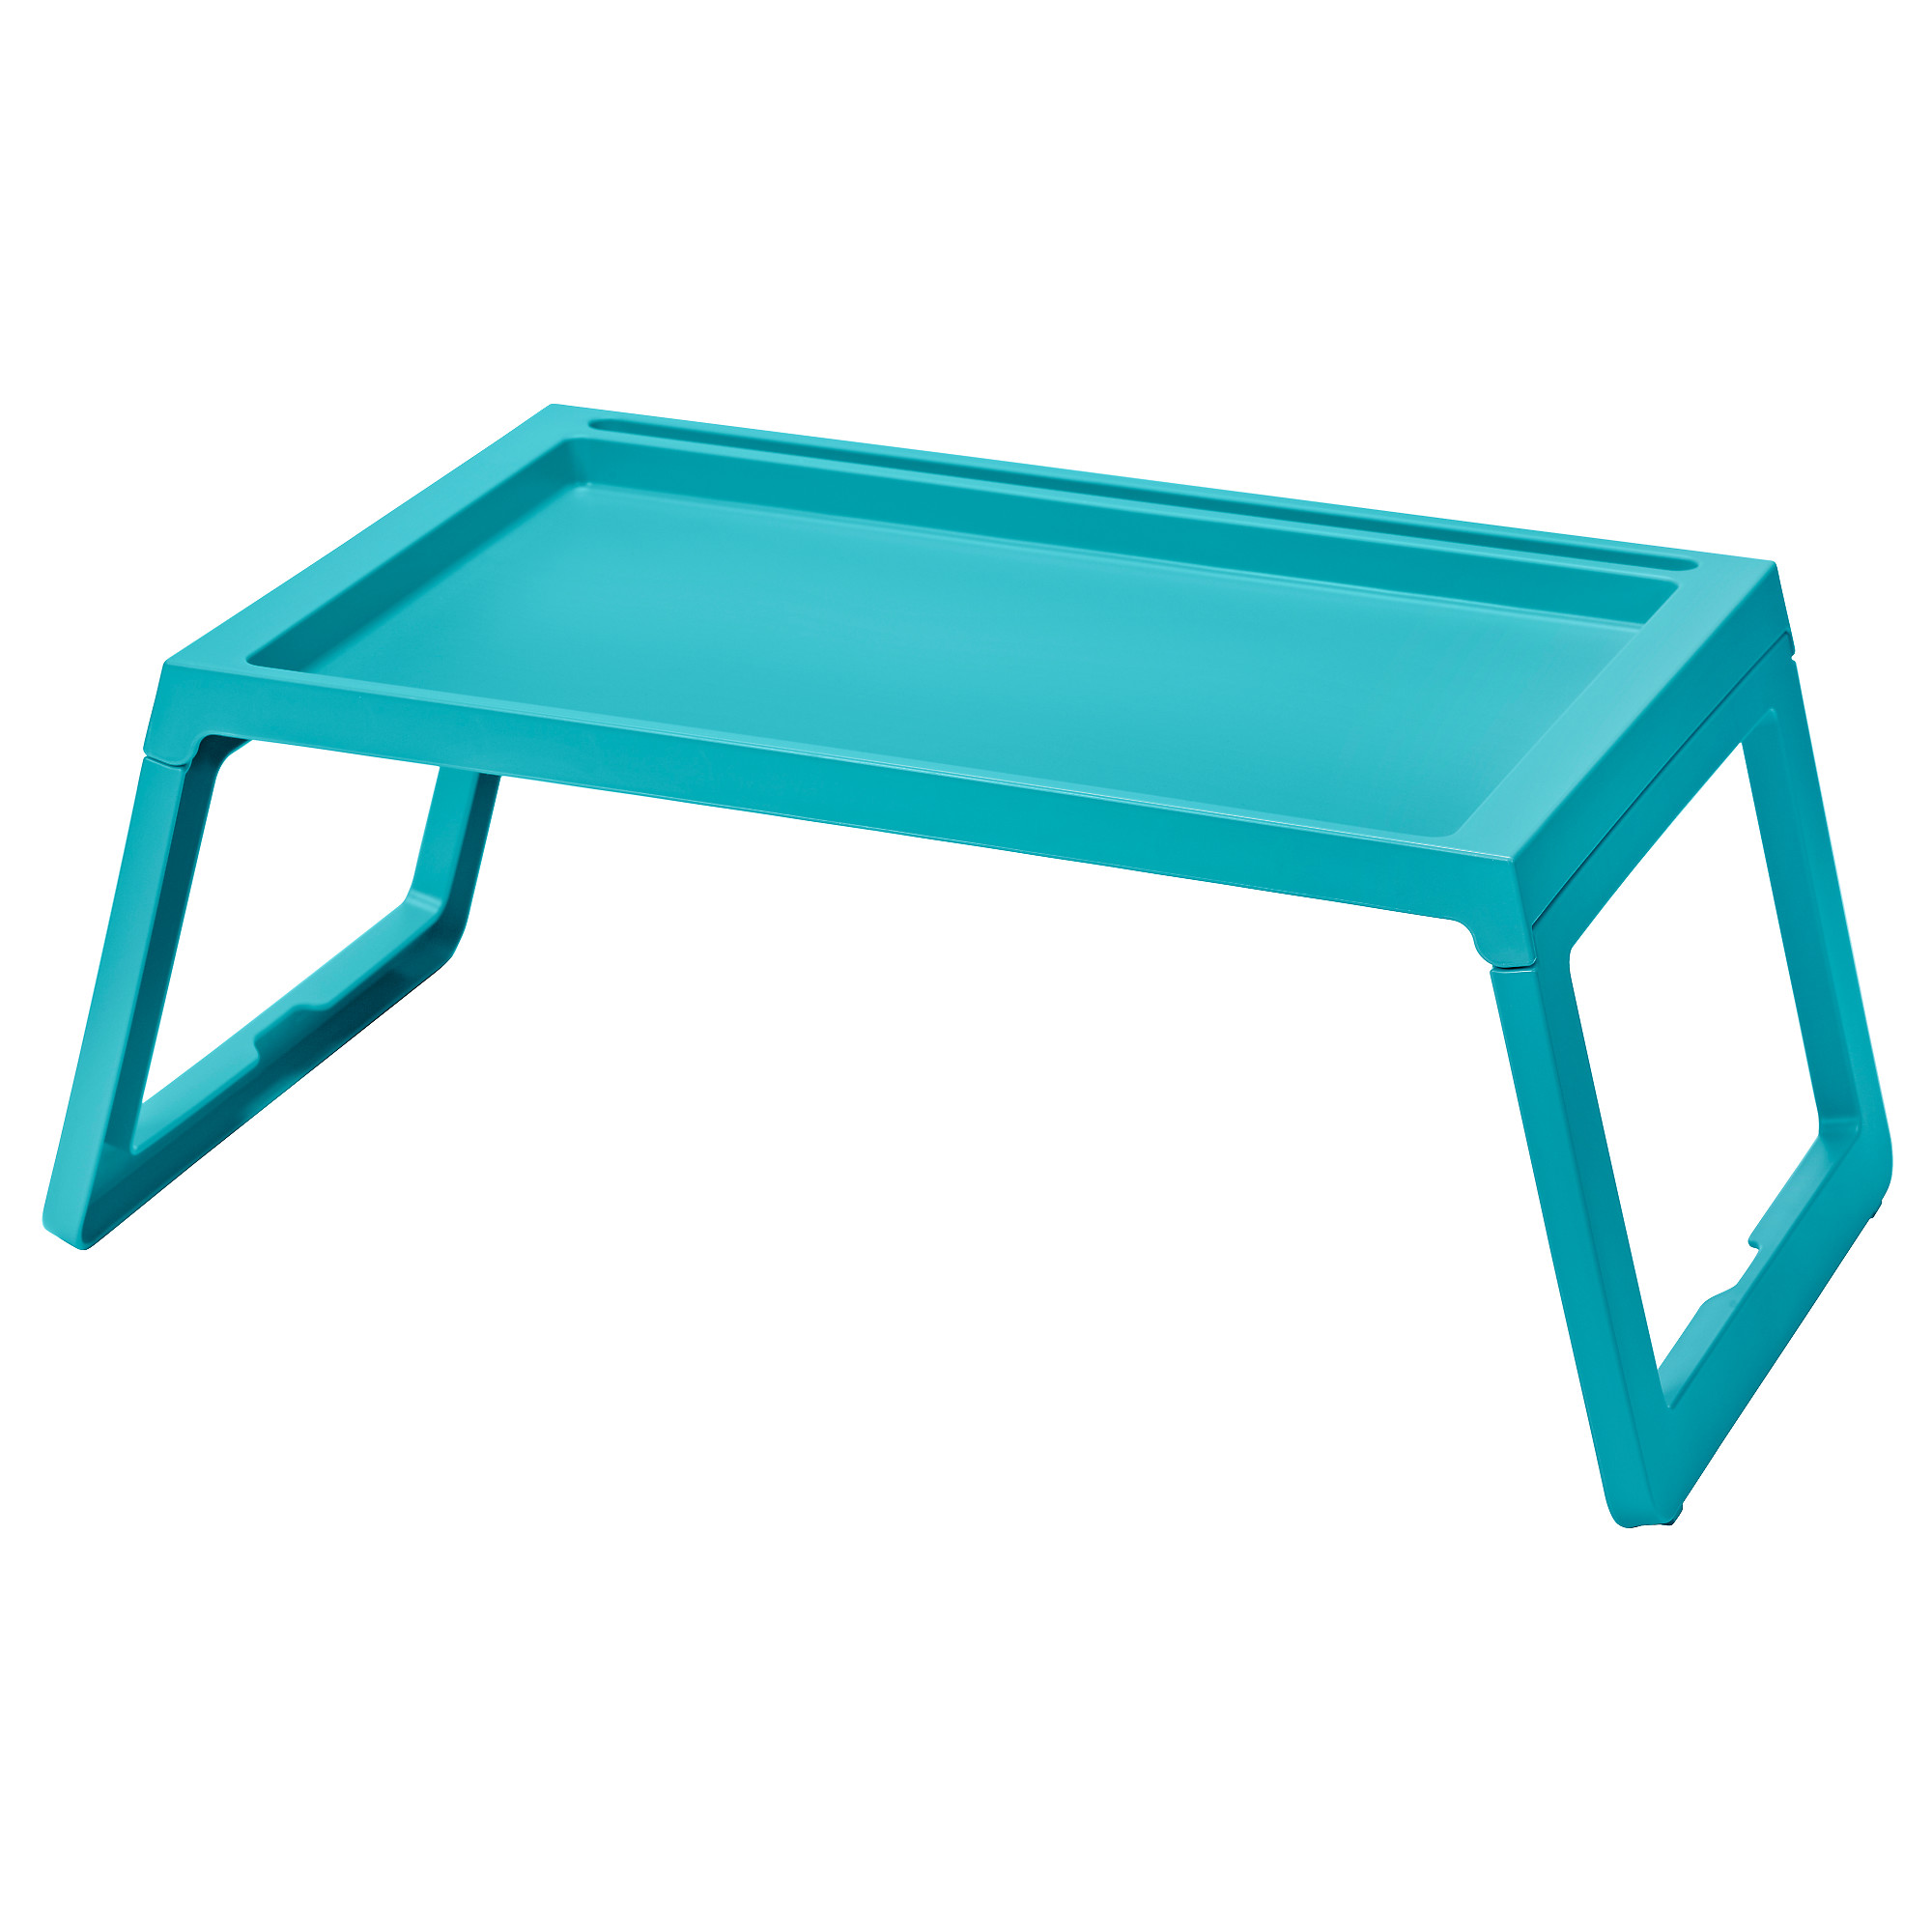 KLIPSK - 床上餐盤, 湖水綠色, 36x56x26 cm | IKEA 香港及澳門